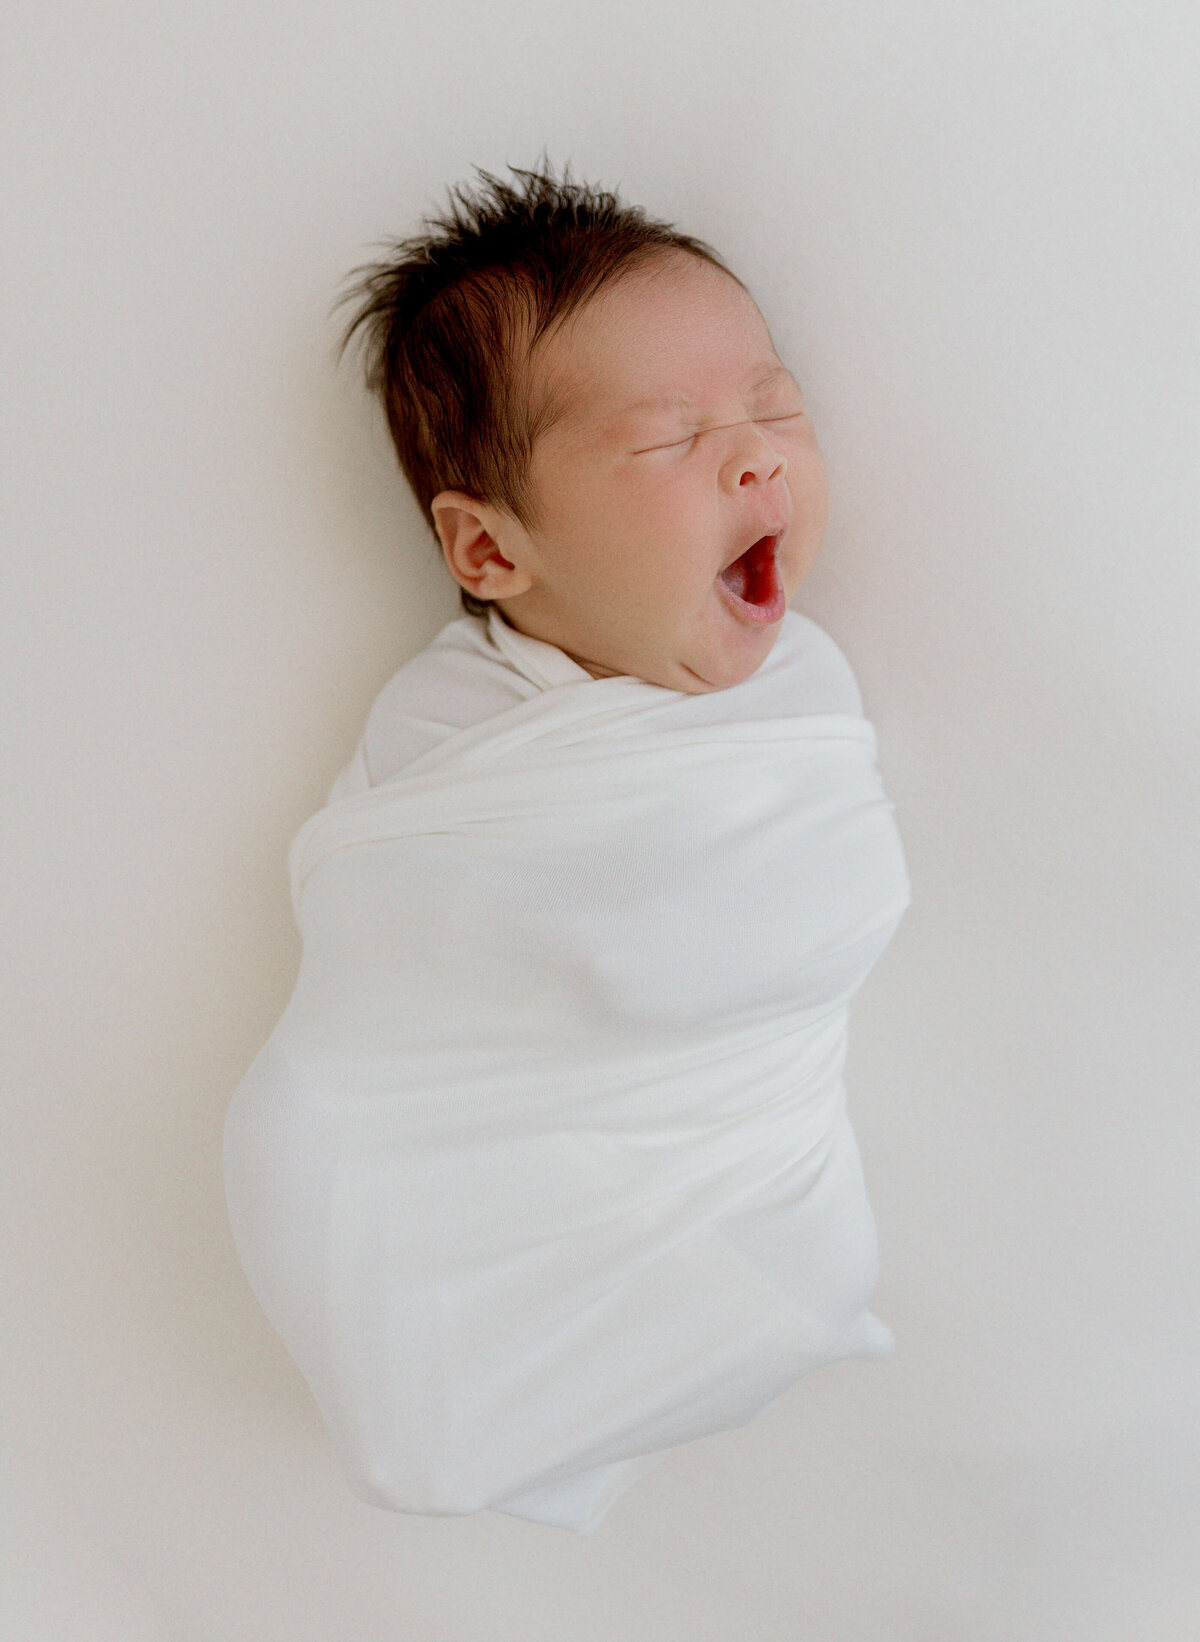 Bay-Area-Newborn-Photographer-95